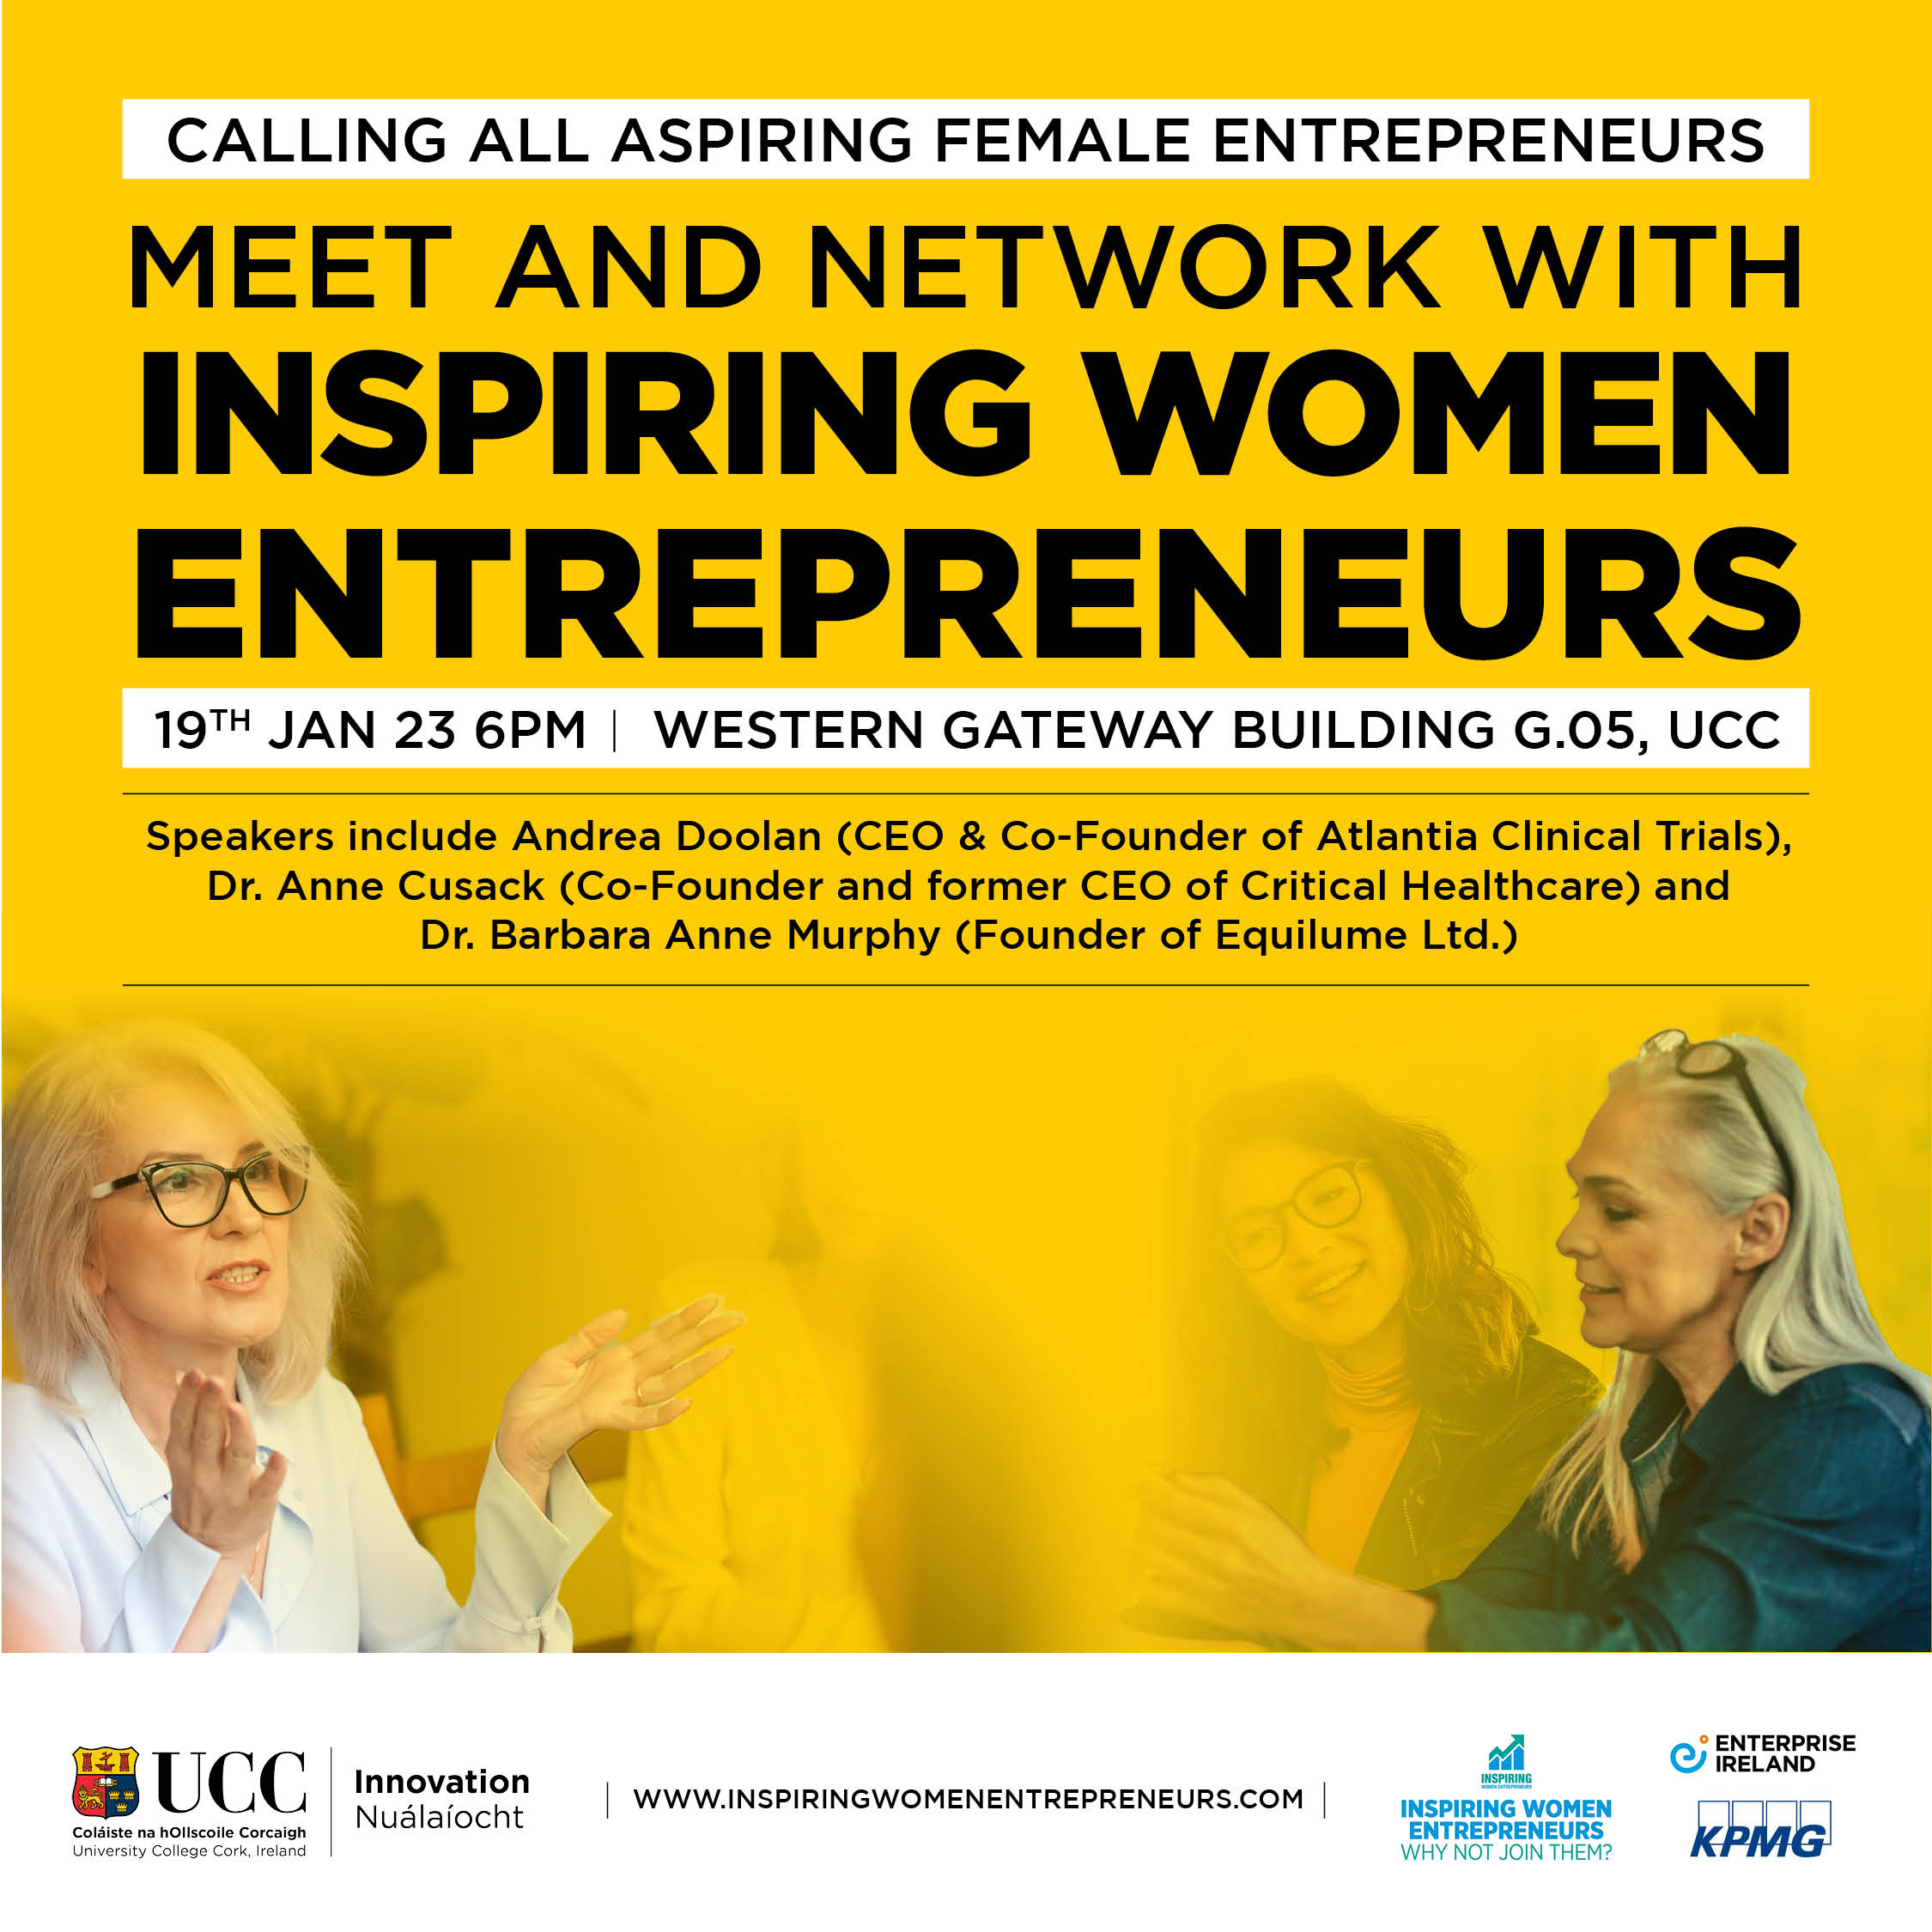 Inspiring Women Entrepreneurs Event to be Hosted in UCC